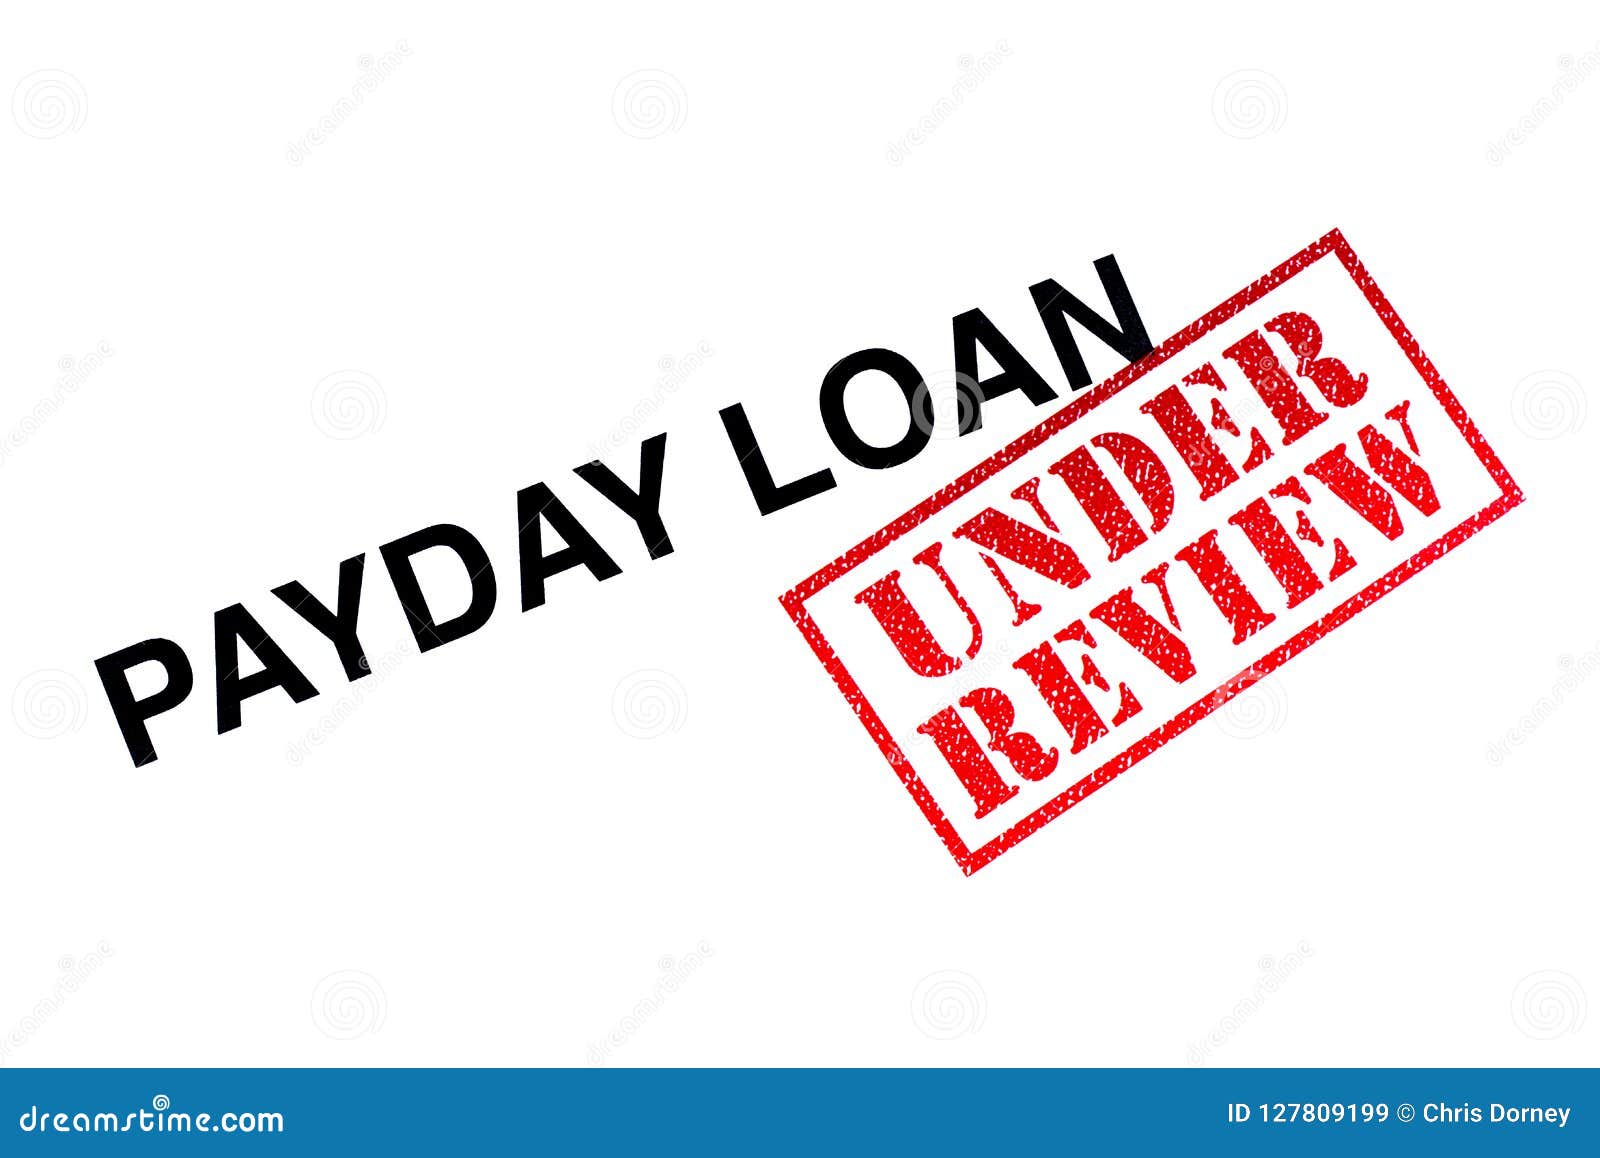 payday loan reviews